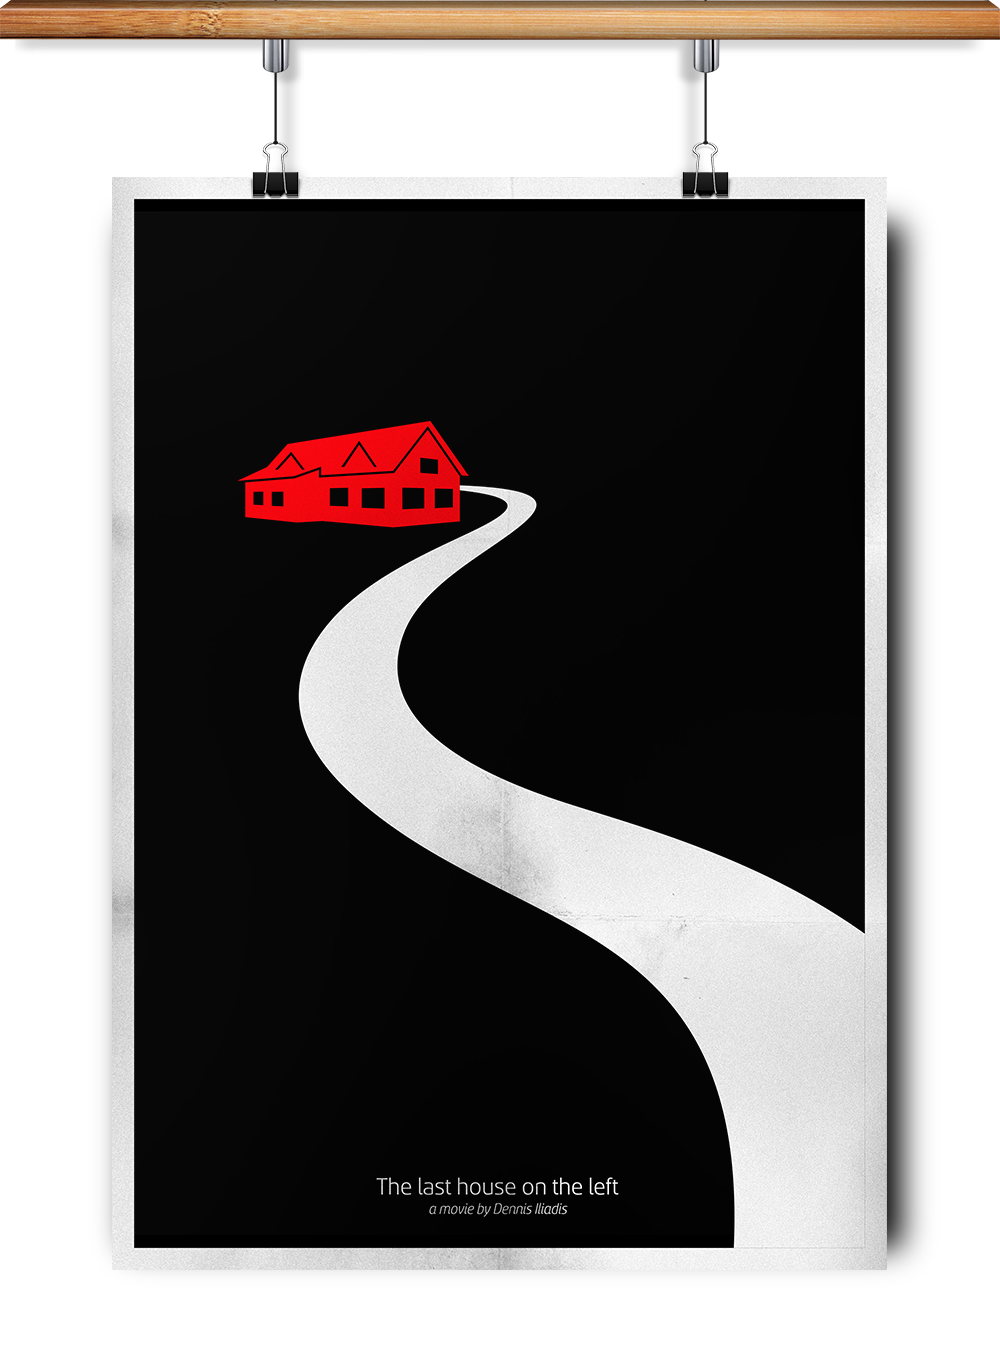 minimalist movie posters sixth sense HIGHLANDER Edge of Tomorrow black swan Lula 127 hours